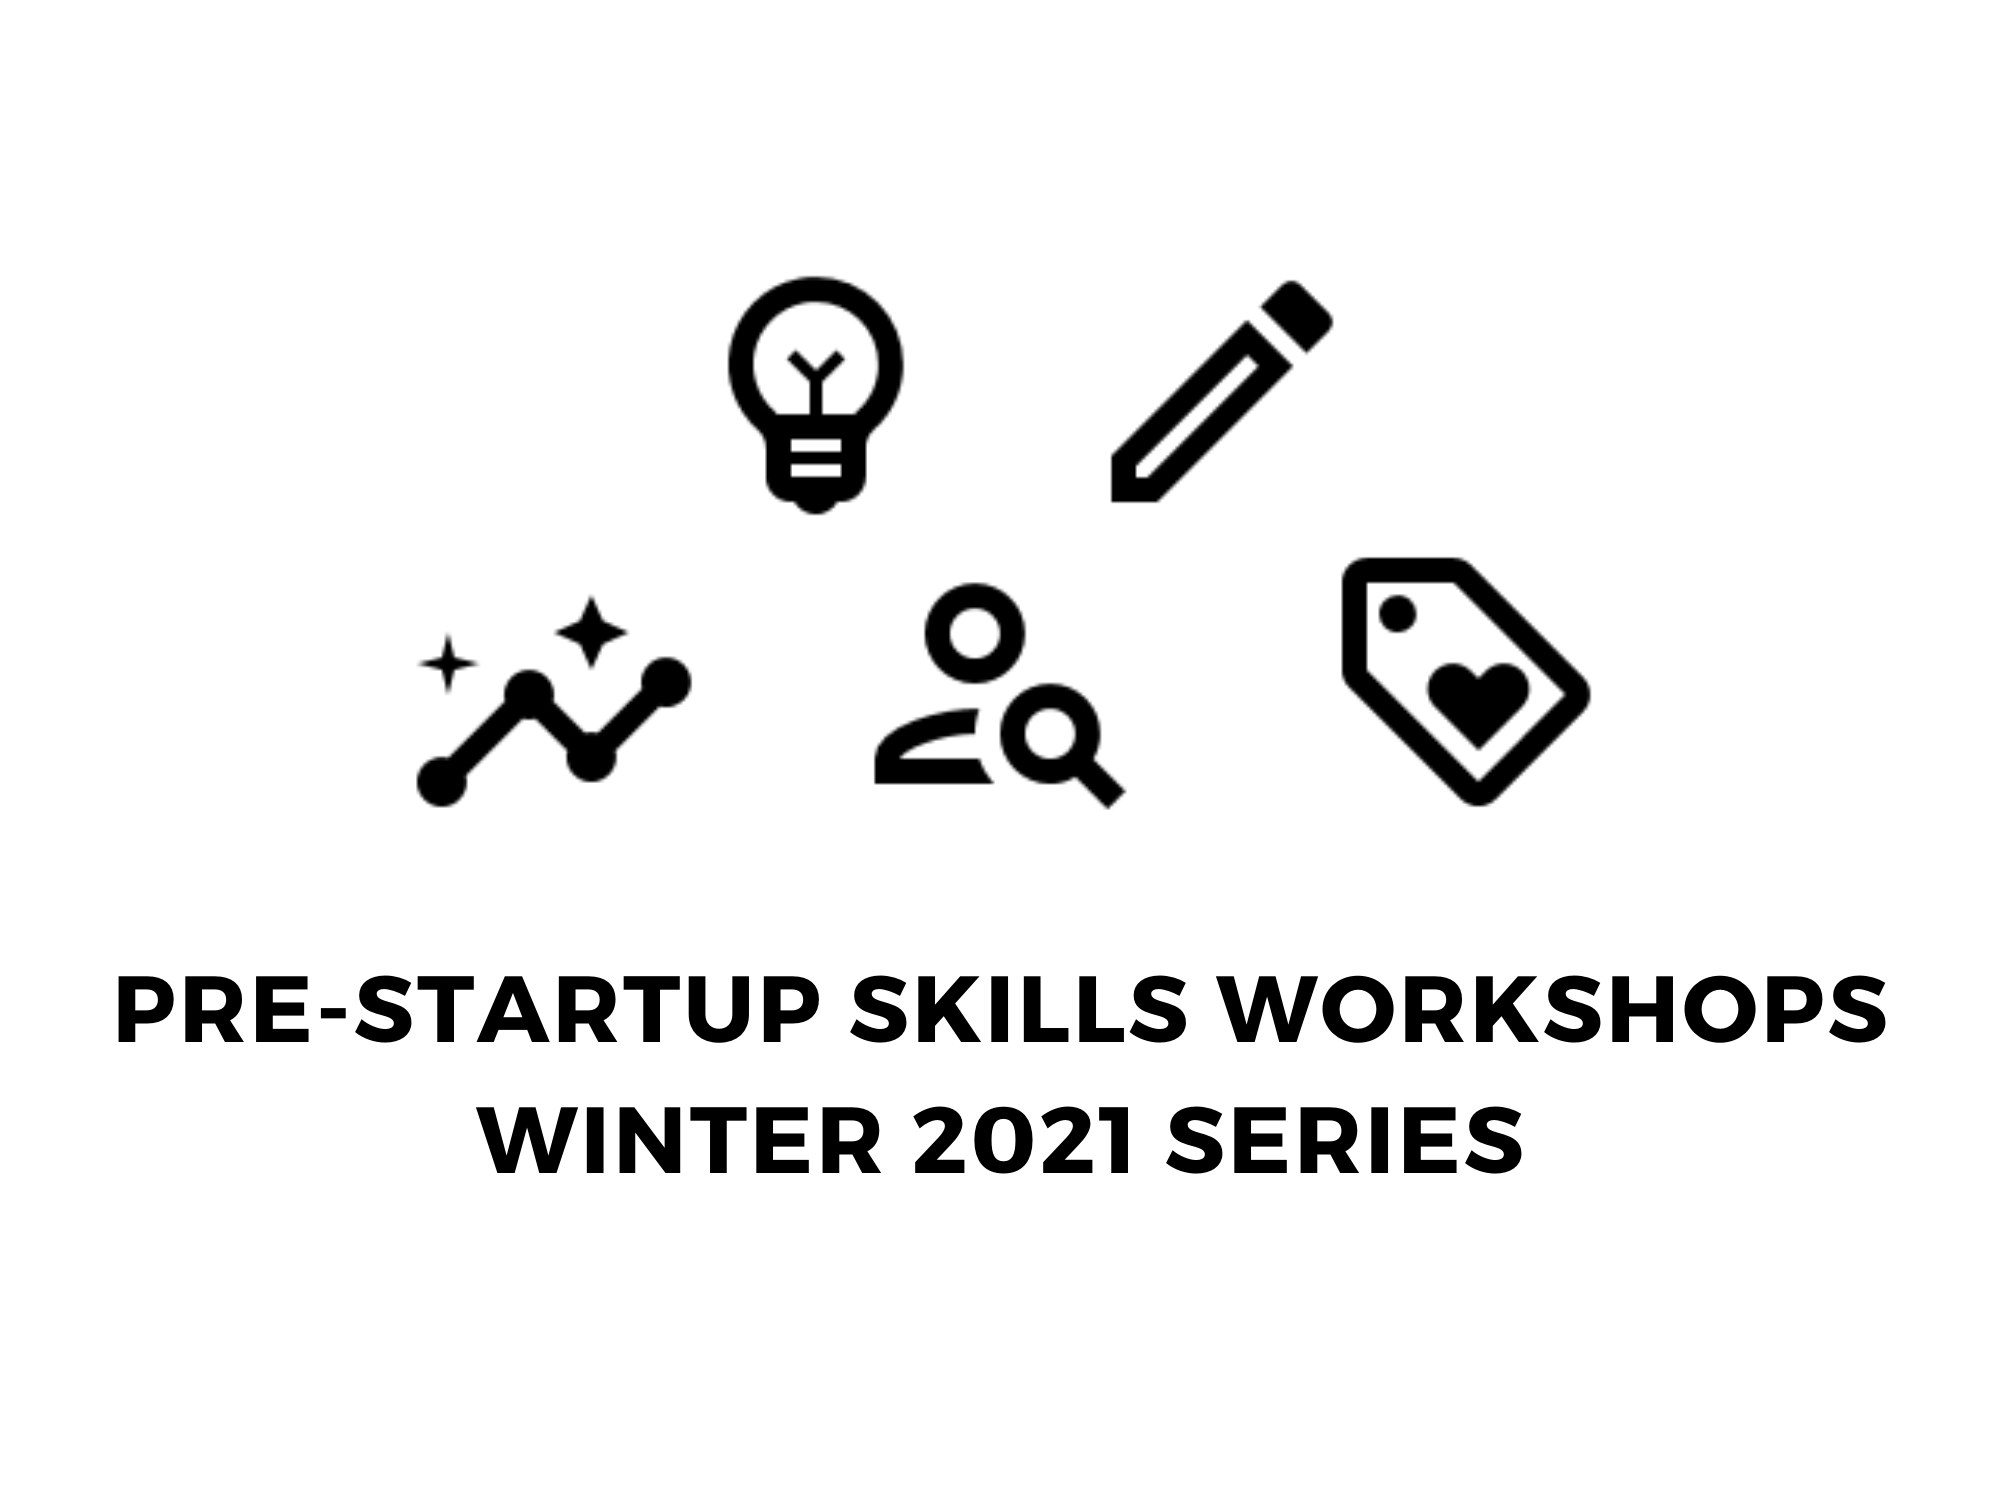 Pre-Startup Skills Workshop: Technological Innovation and Entrepreneurship 101